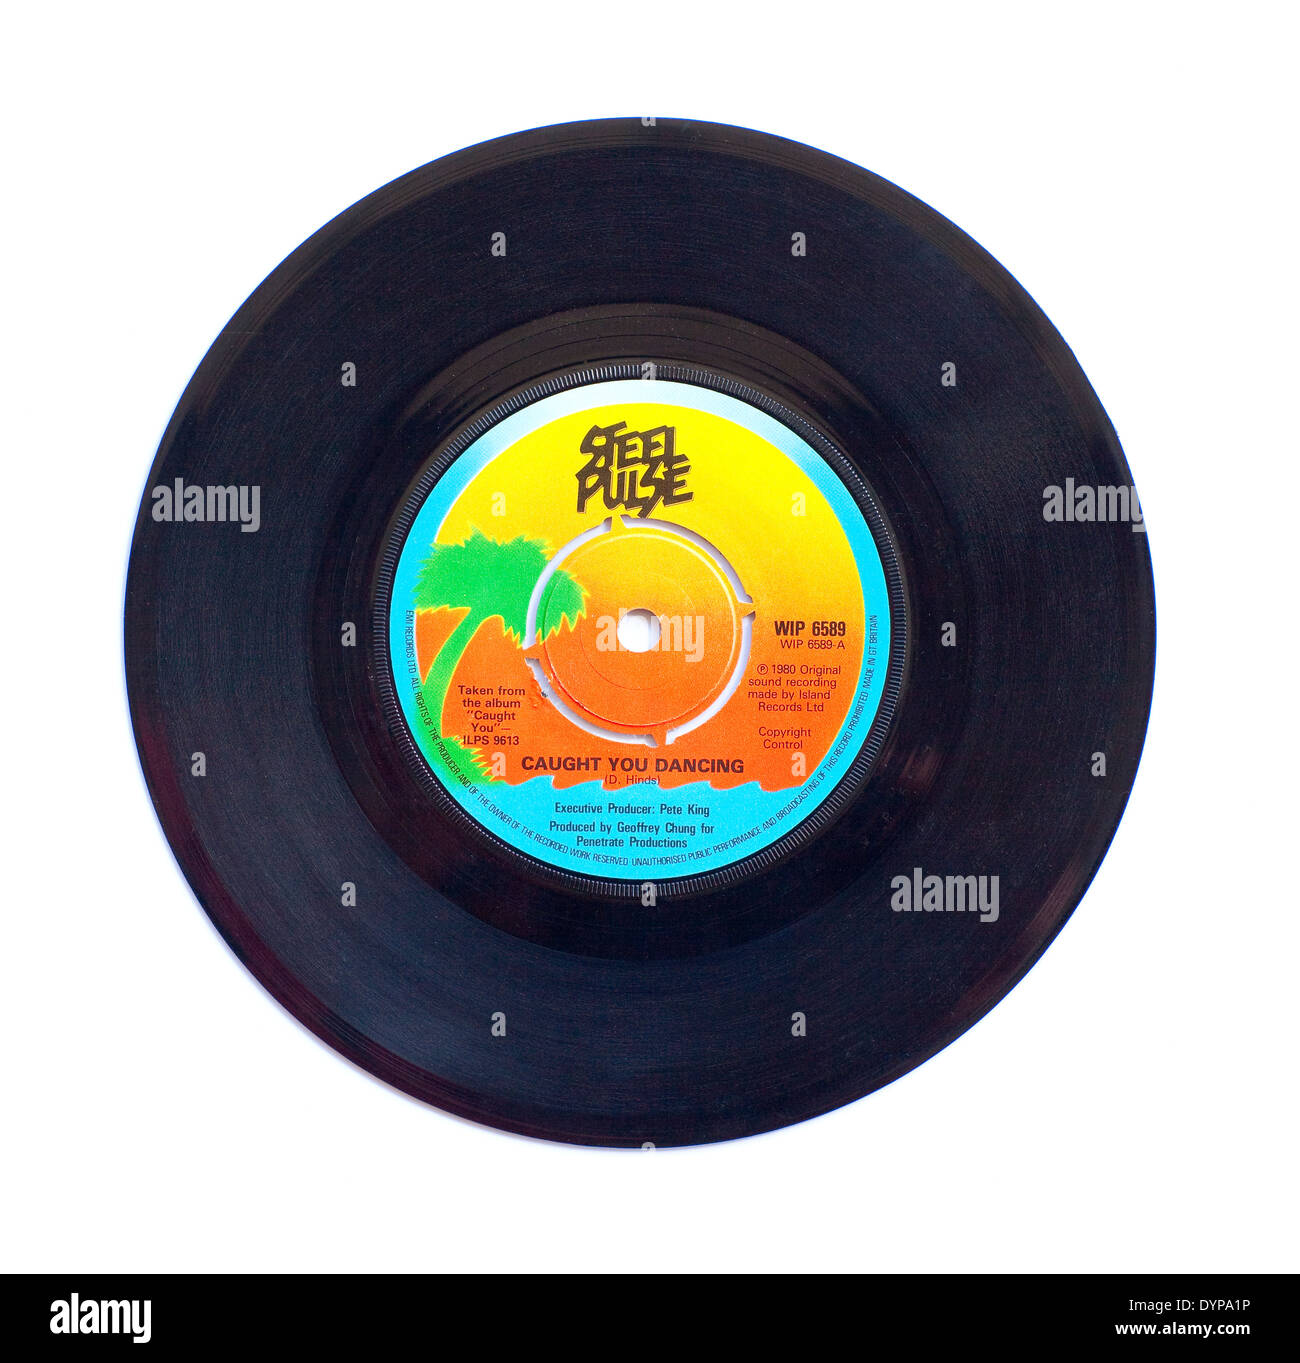 Steel Pulse, erwischt Sie tanzen, Island Records 1980 Stockfoto